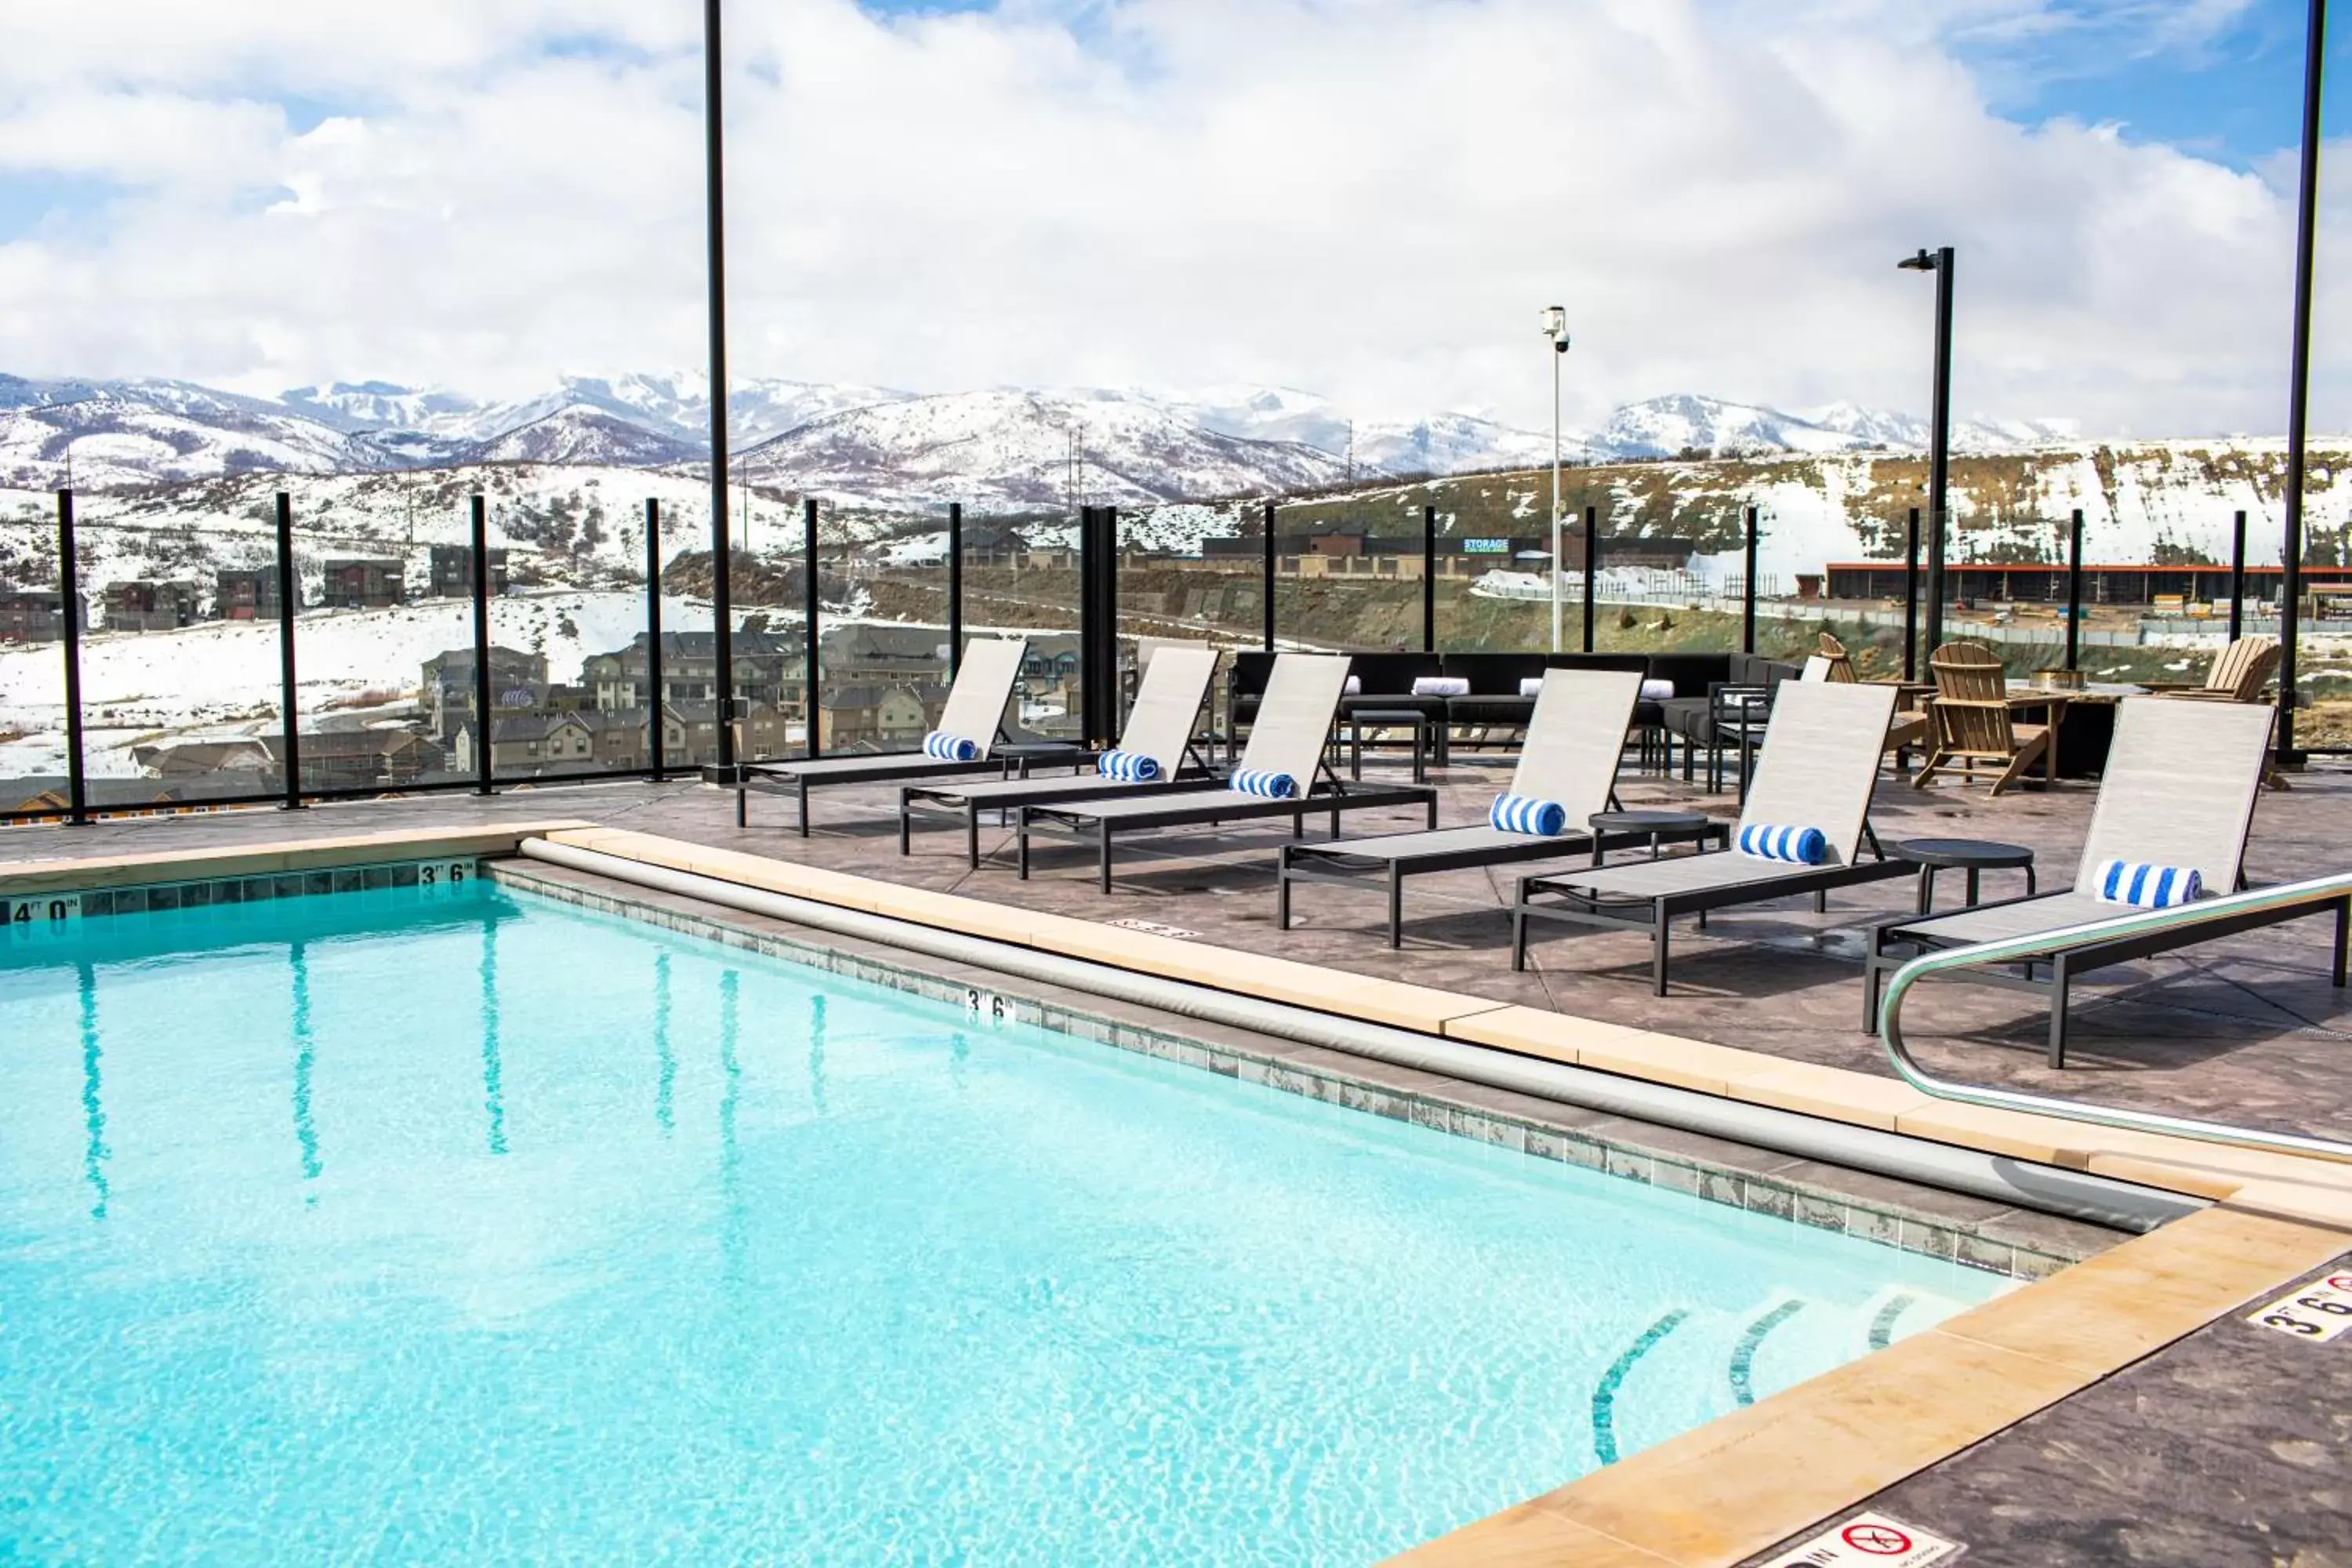 Swimming Pool in Black Rock Mountain Resort